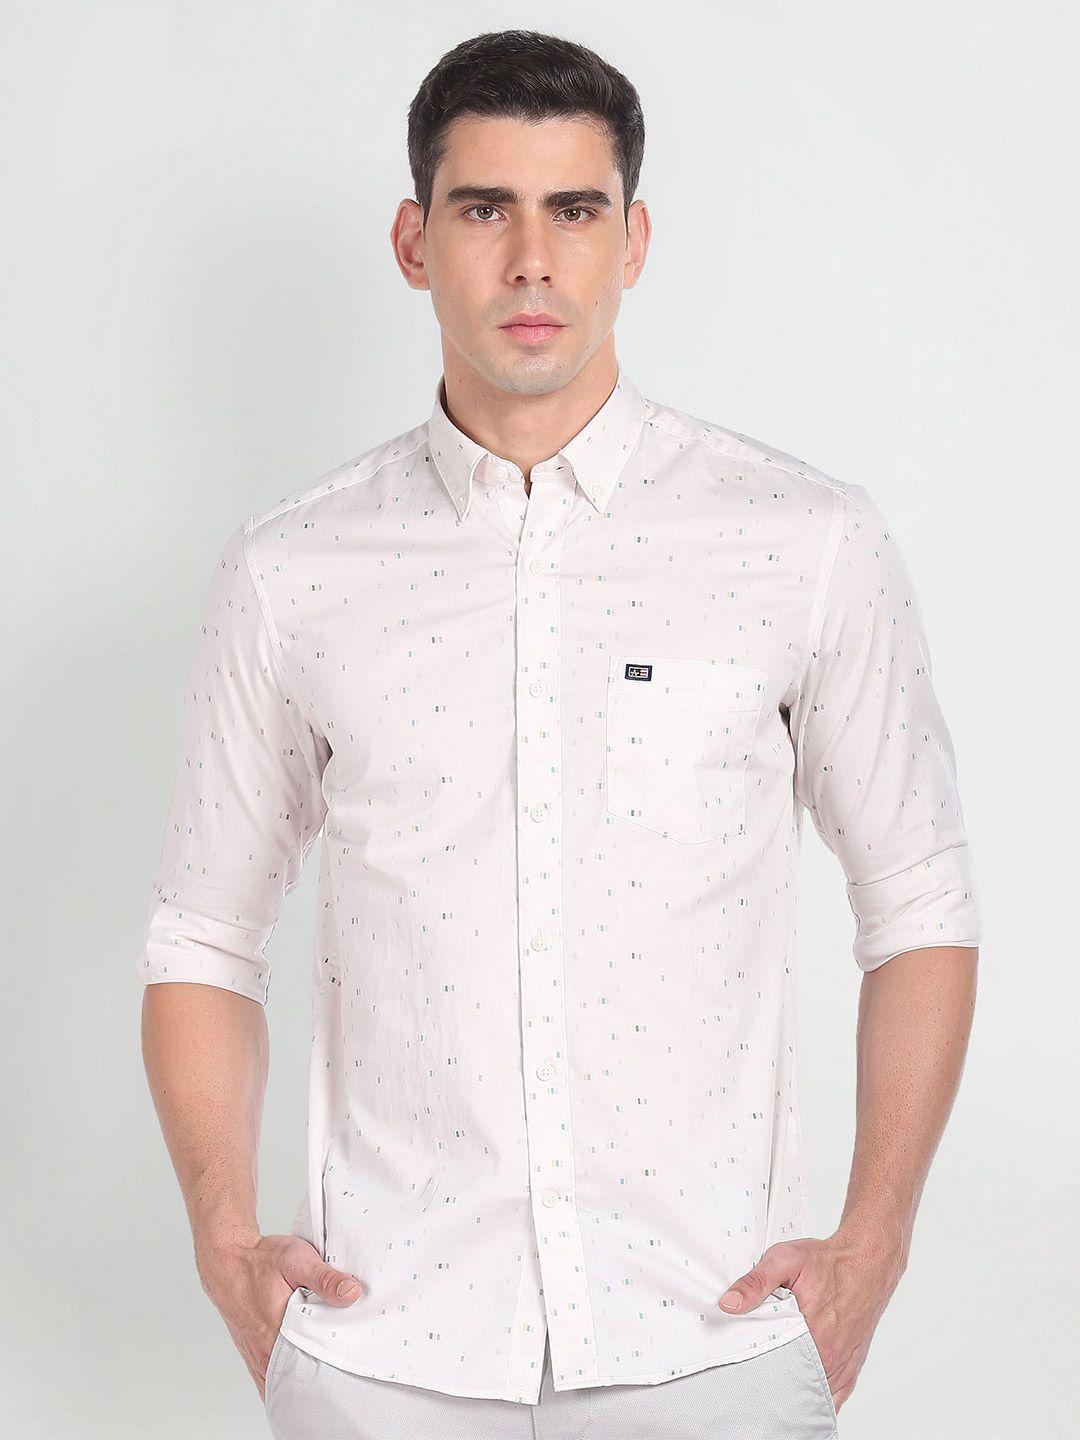 arrow sport slim fit opaque geometric printed pure cotton casual shirt